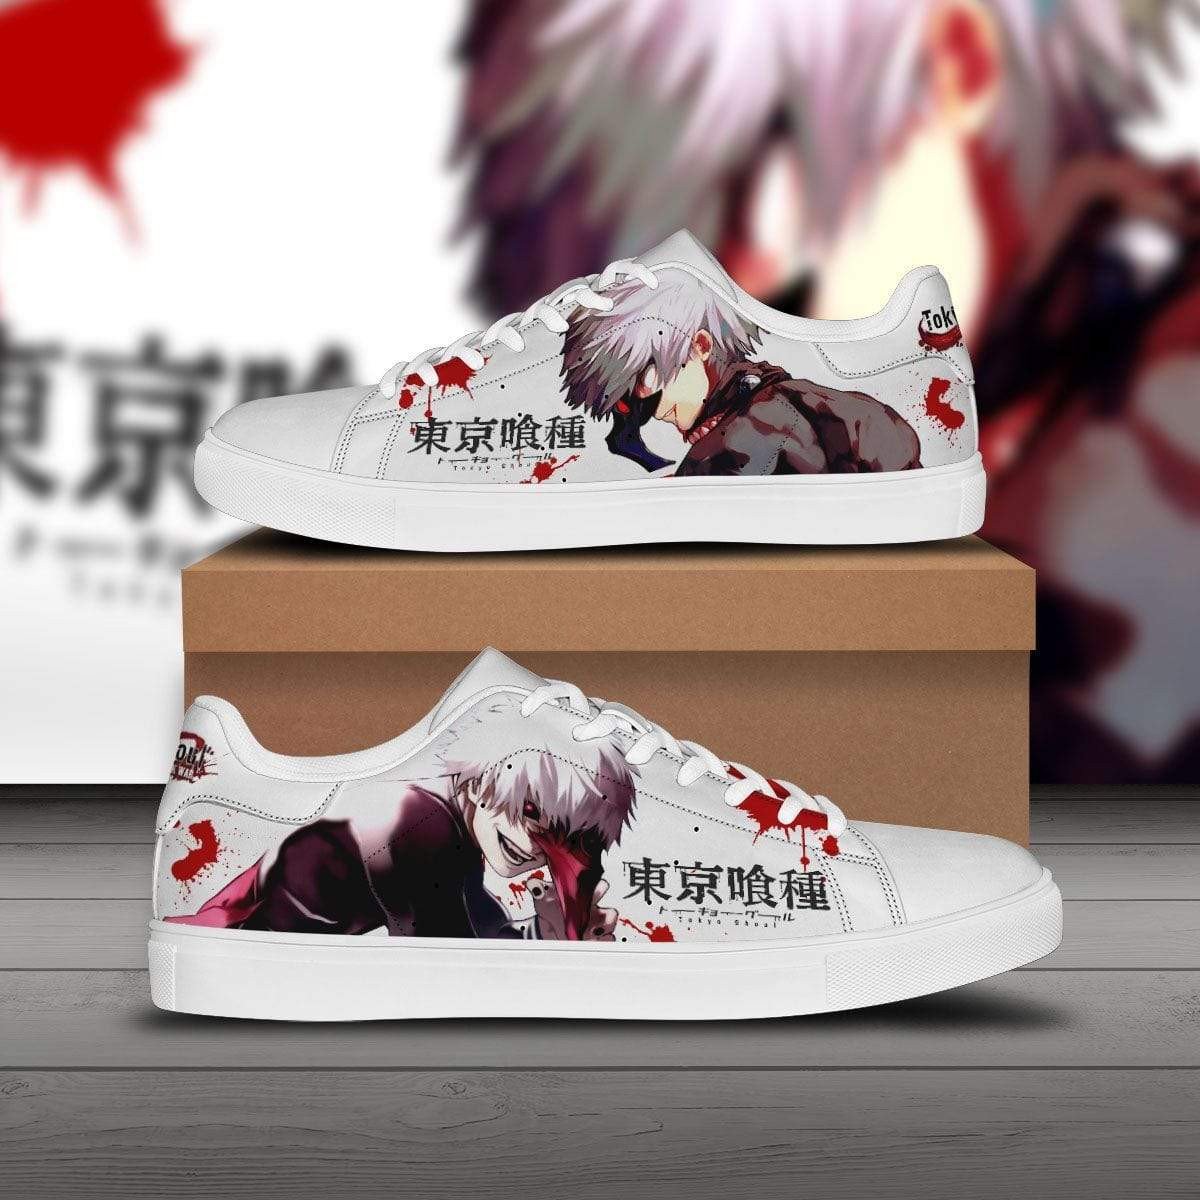 tokyo ghoul shoes ken kaneki anime skate sneakers